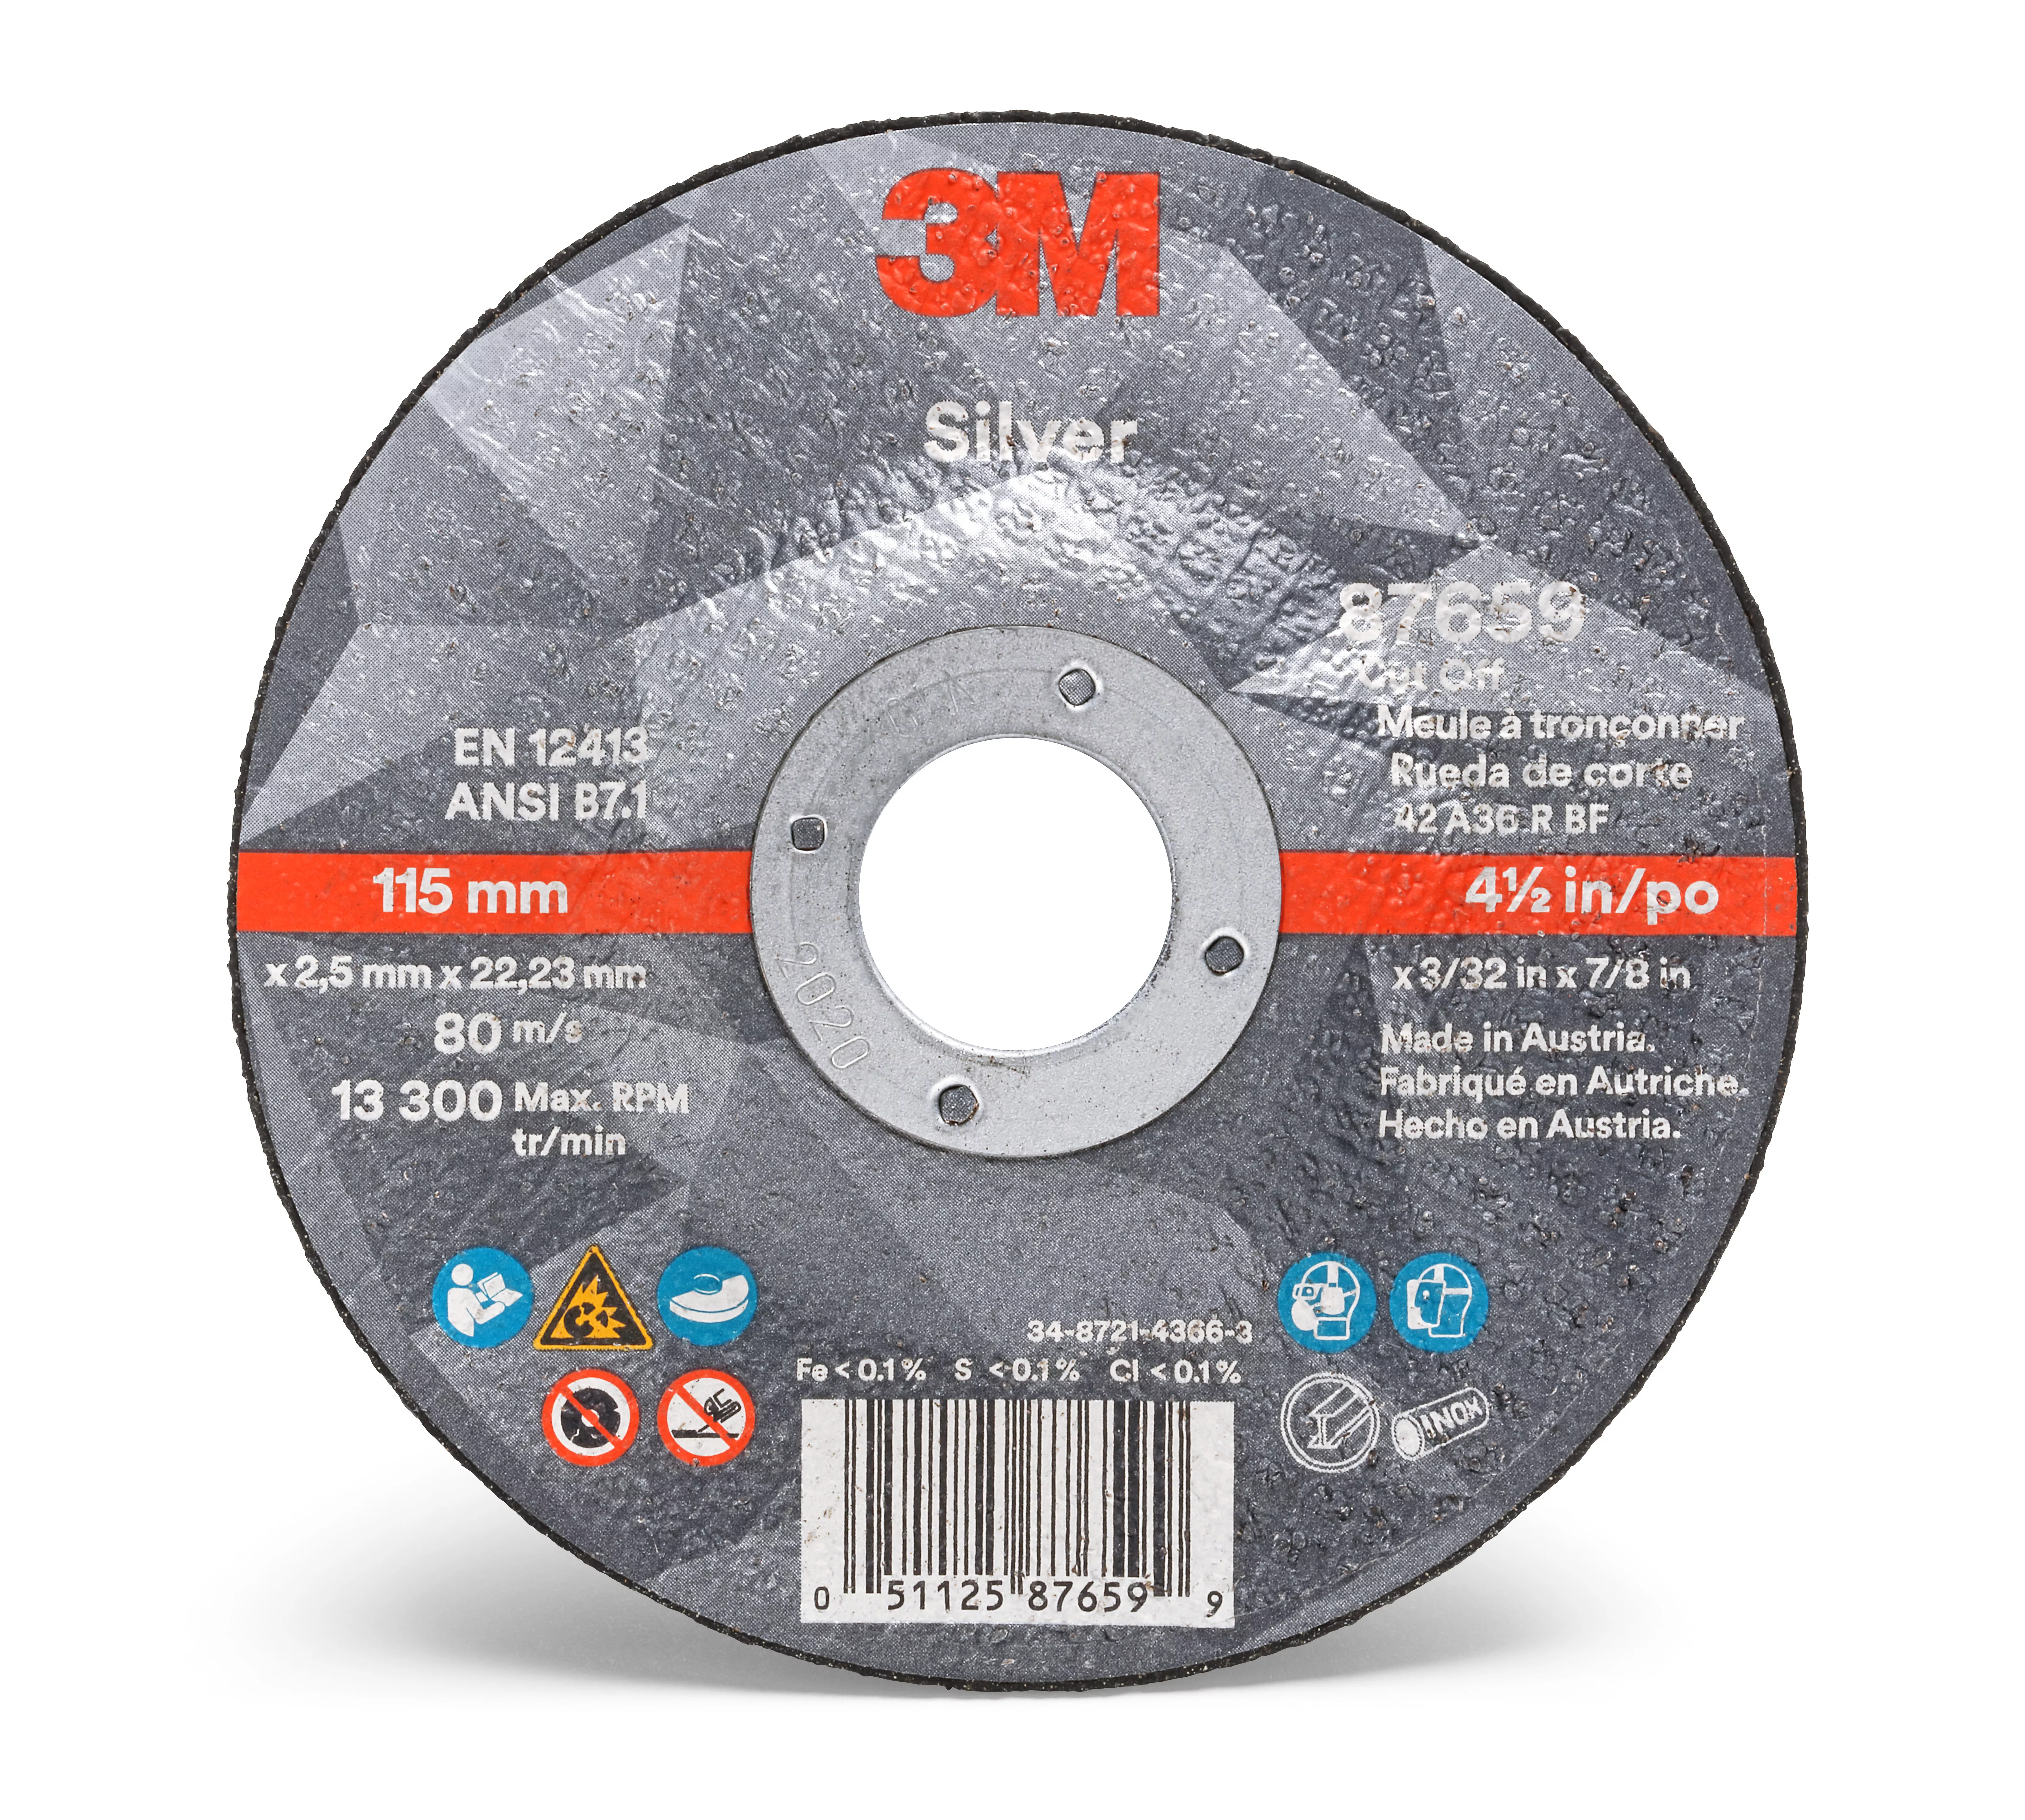 UPC 00051125876599 | 3M™ Silver Cut-Off Wheel